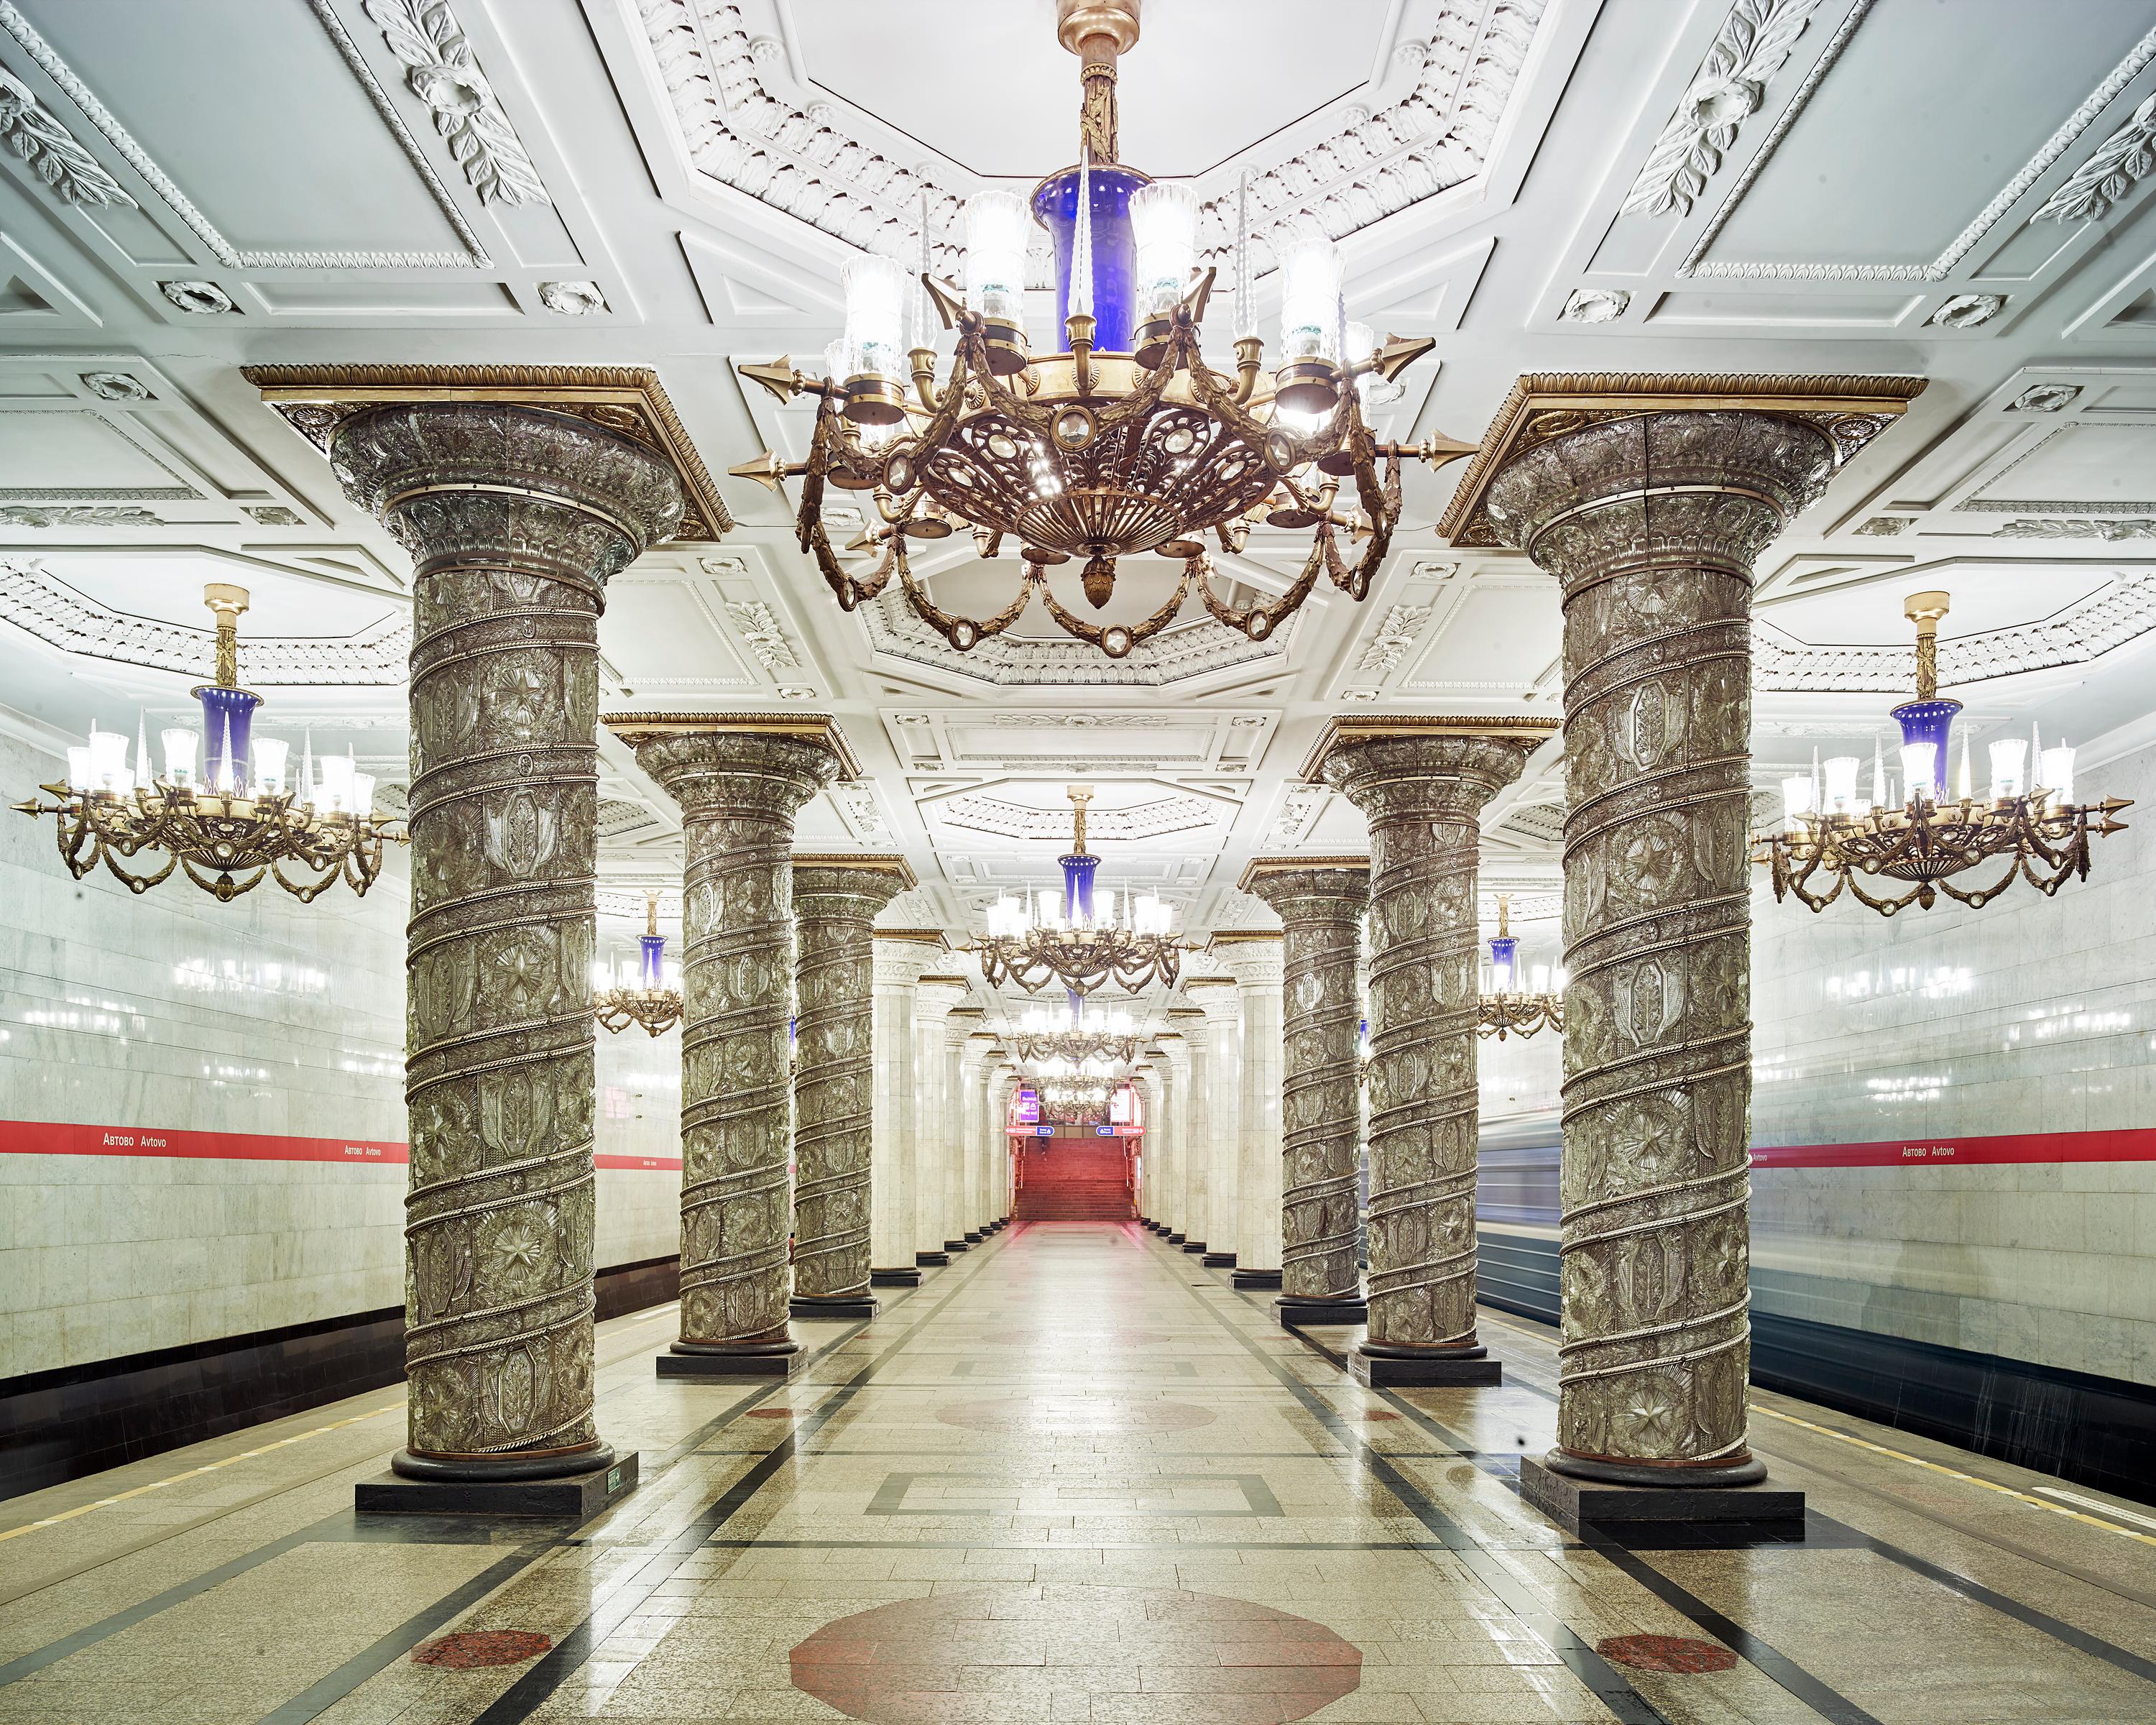 David Burdeny Color Photograph - Avoto Metro Station, St. Petersburg, Russia